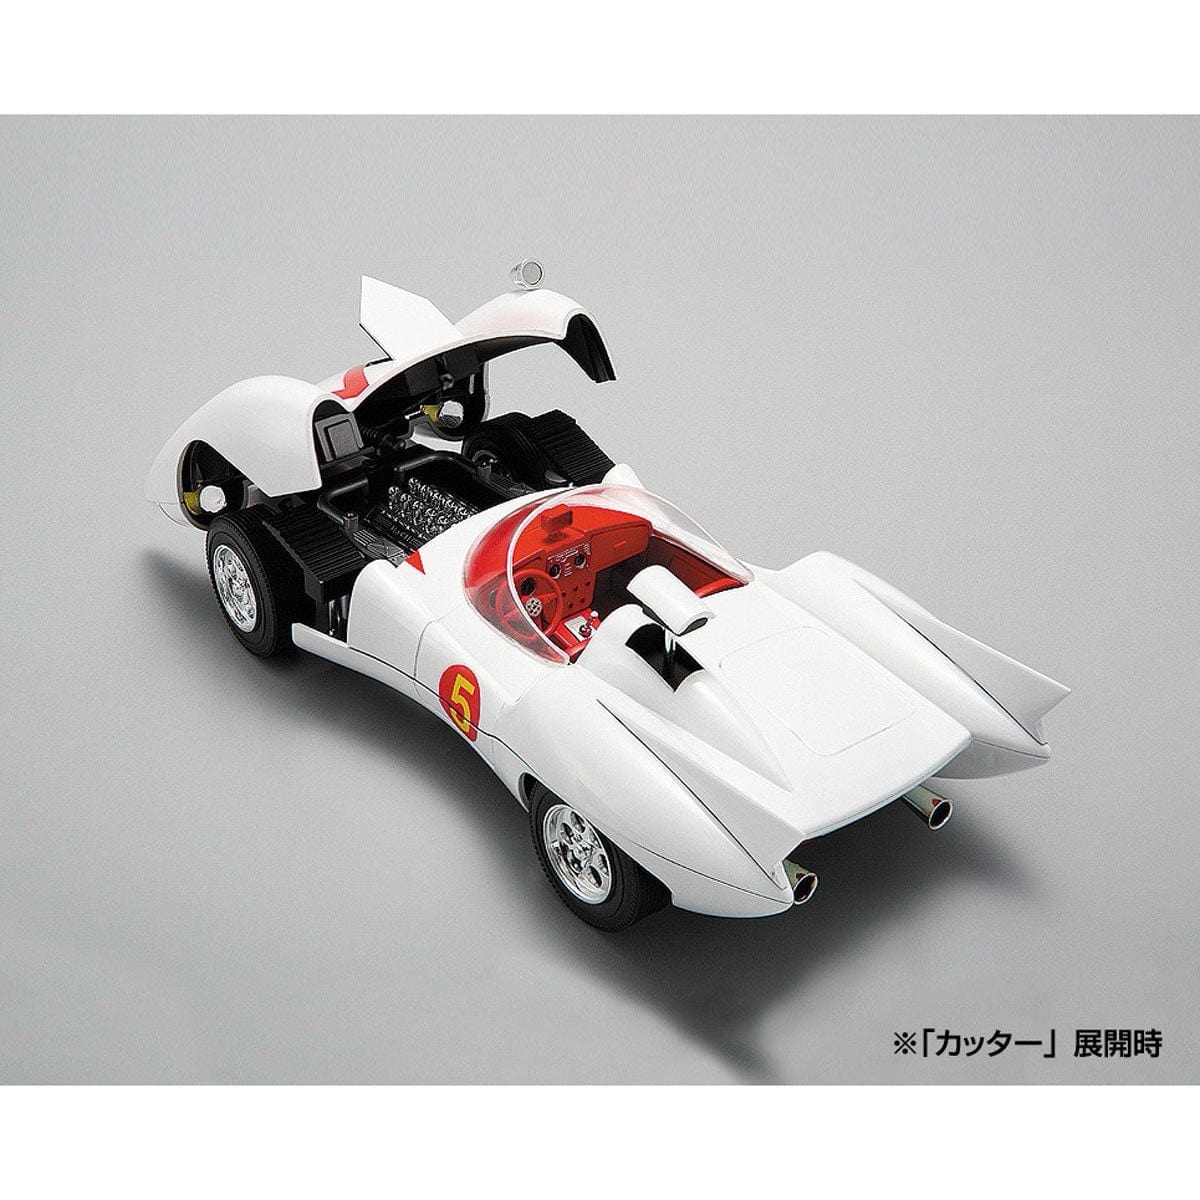 Aoshima Bunka Kyozai Co. Speed Racer Mach 7 Full Version 1:24 Scale Model Kit